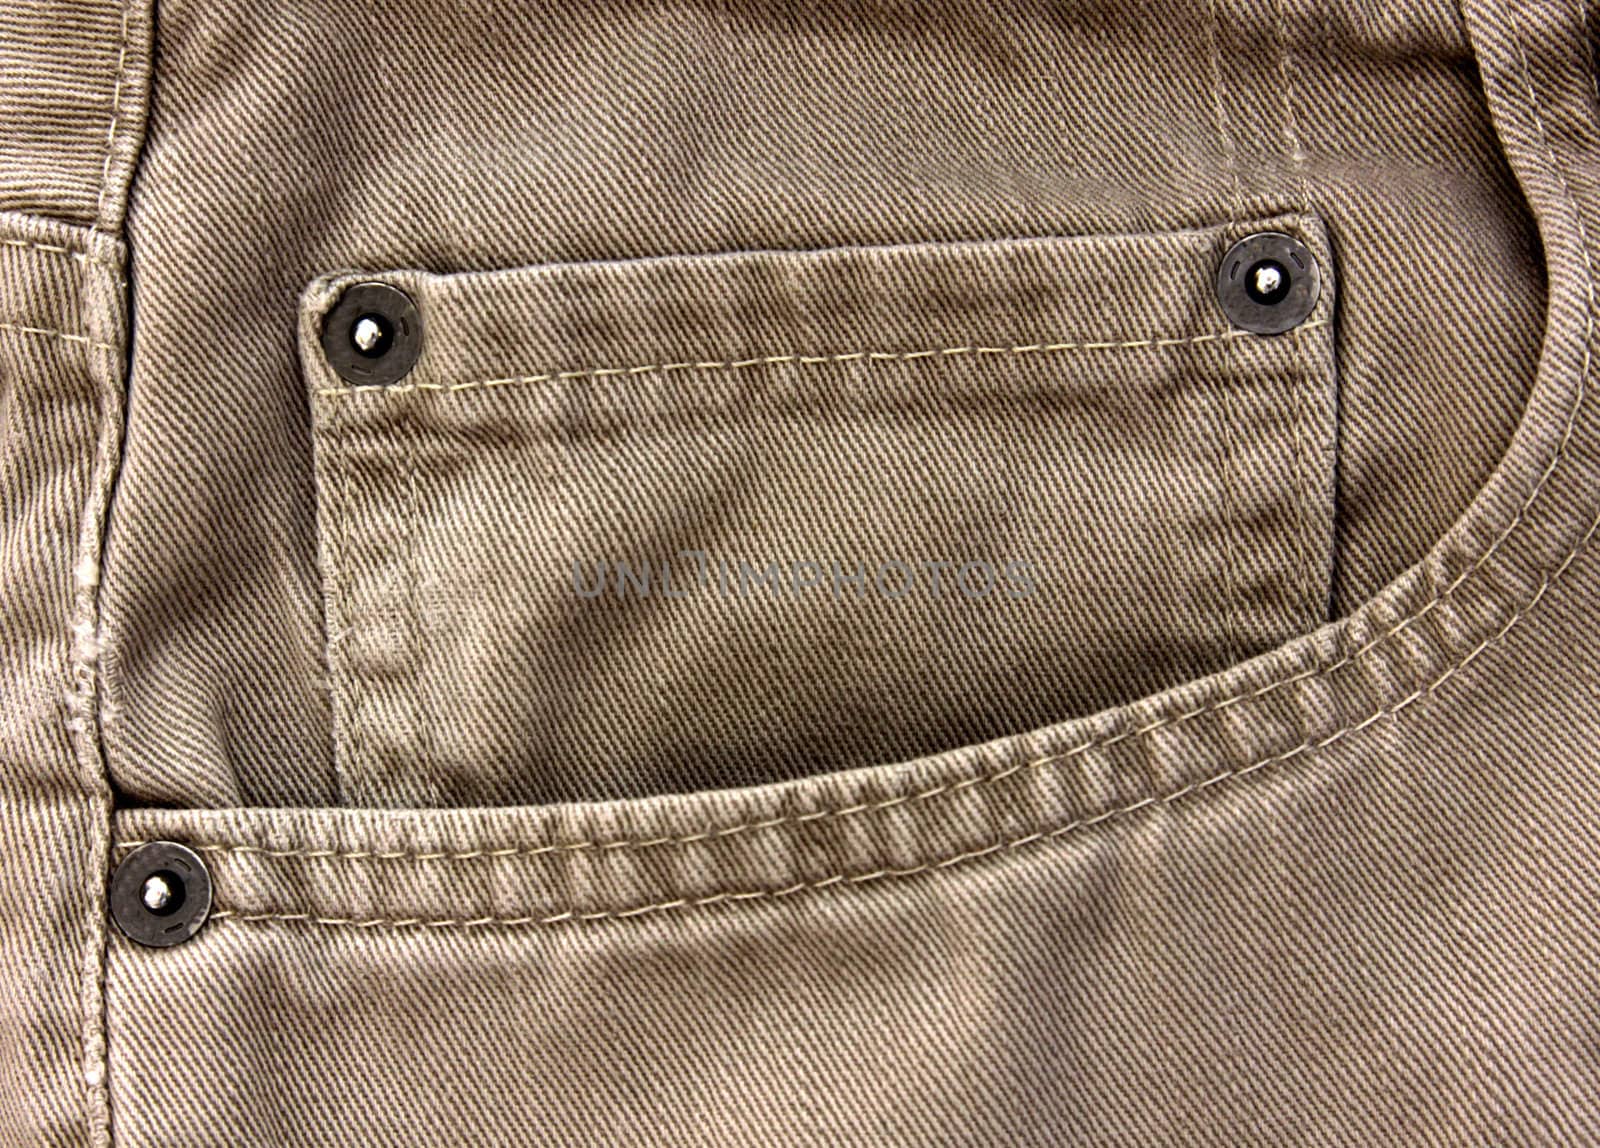 A close up of a beige jean pocket.